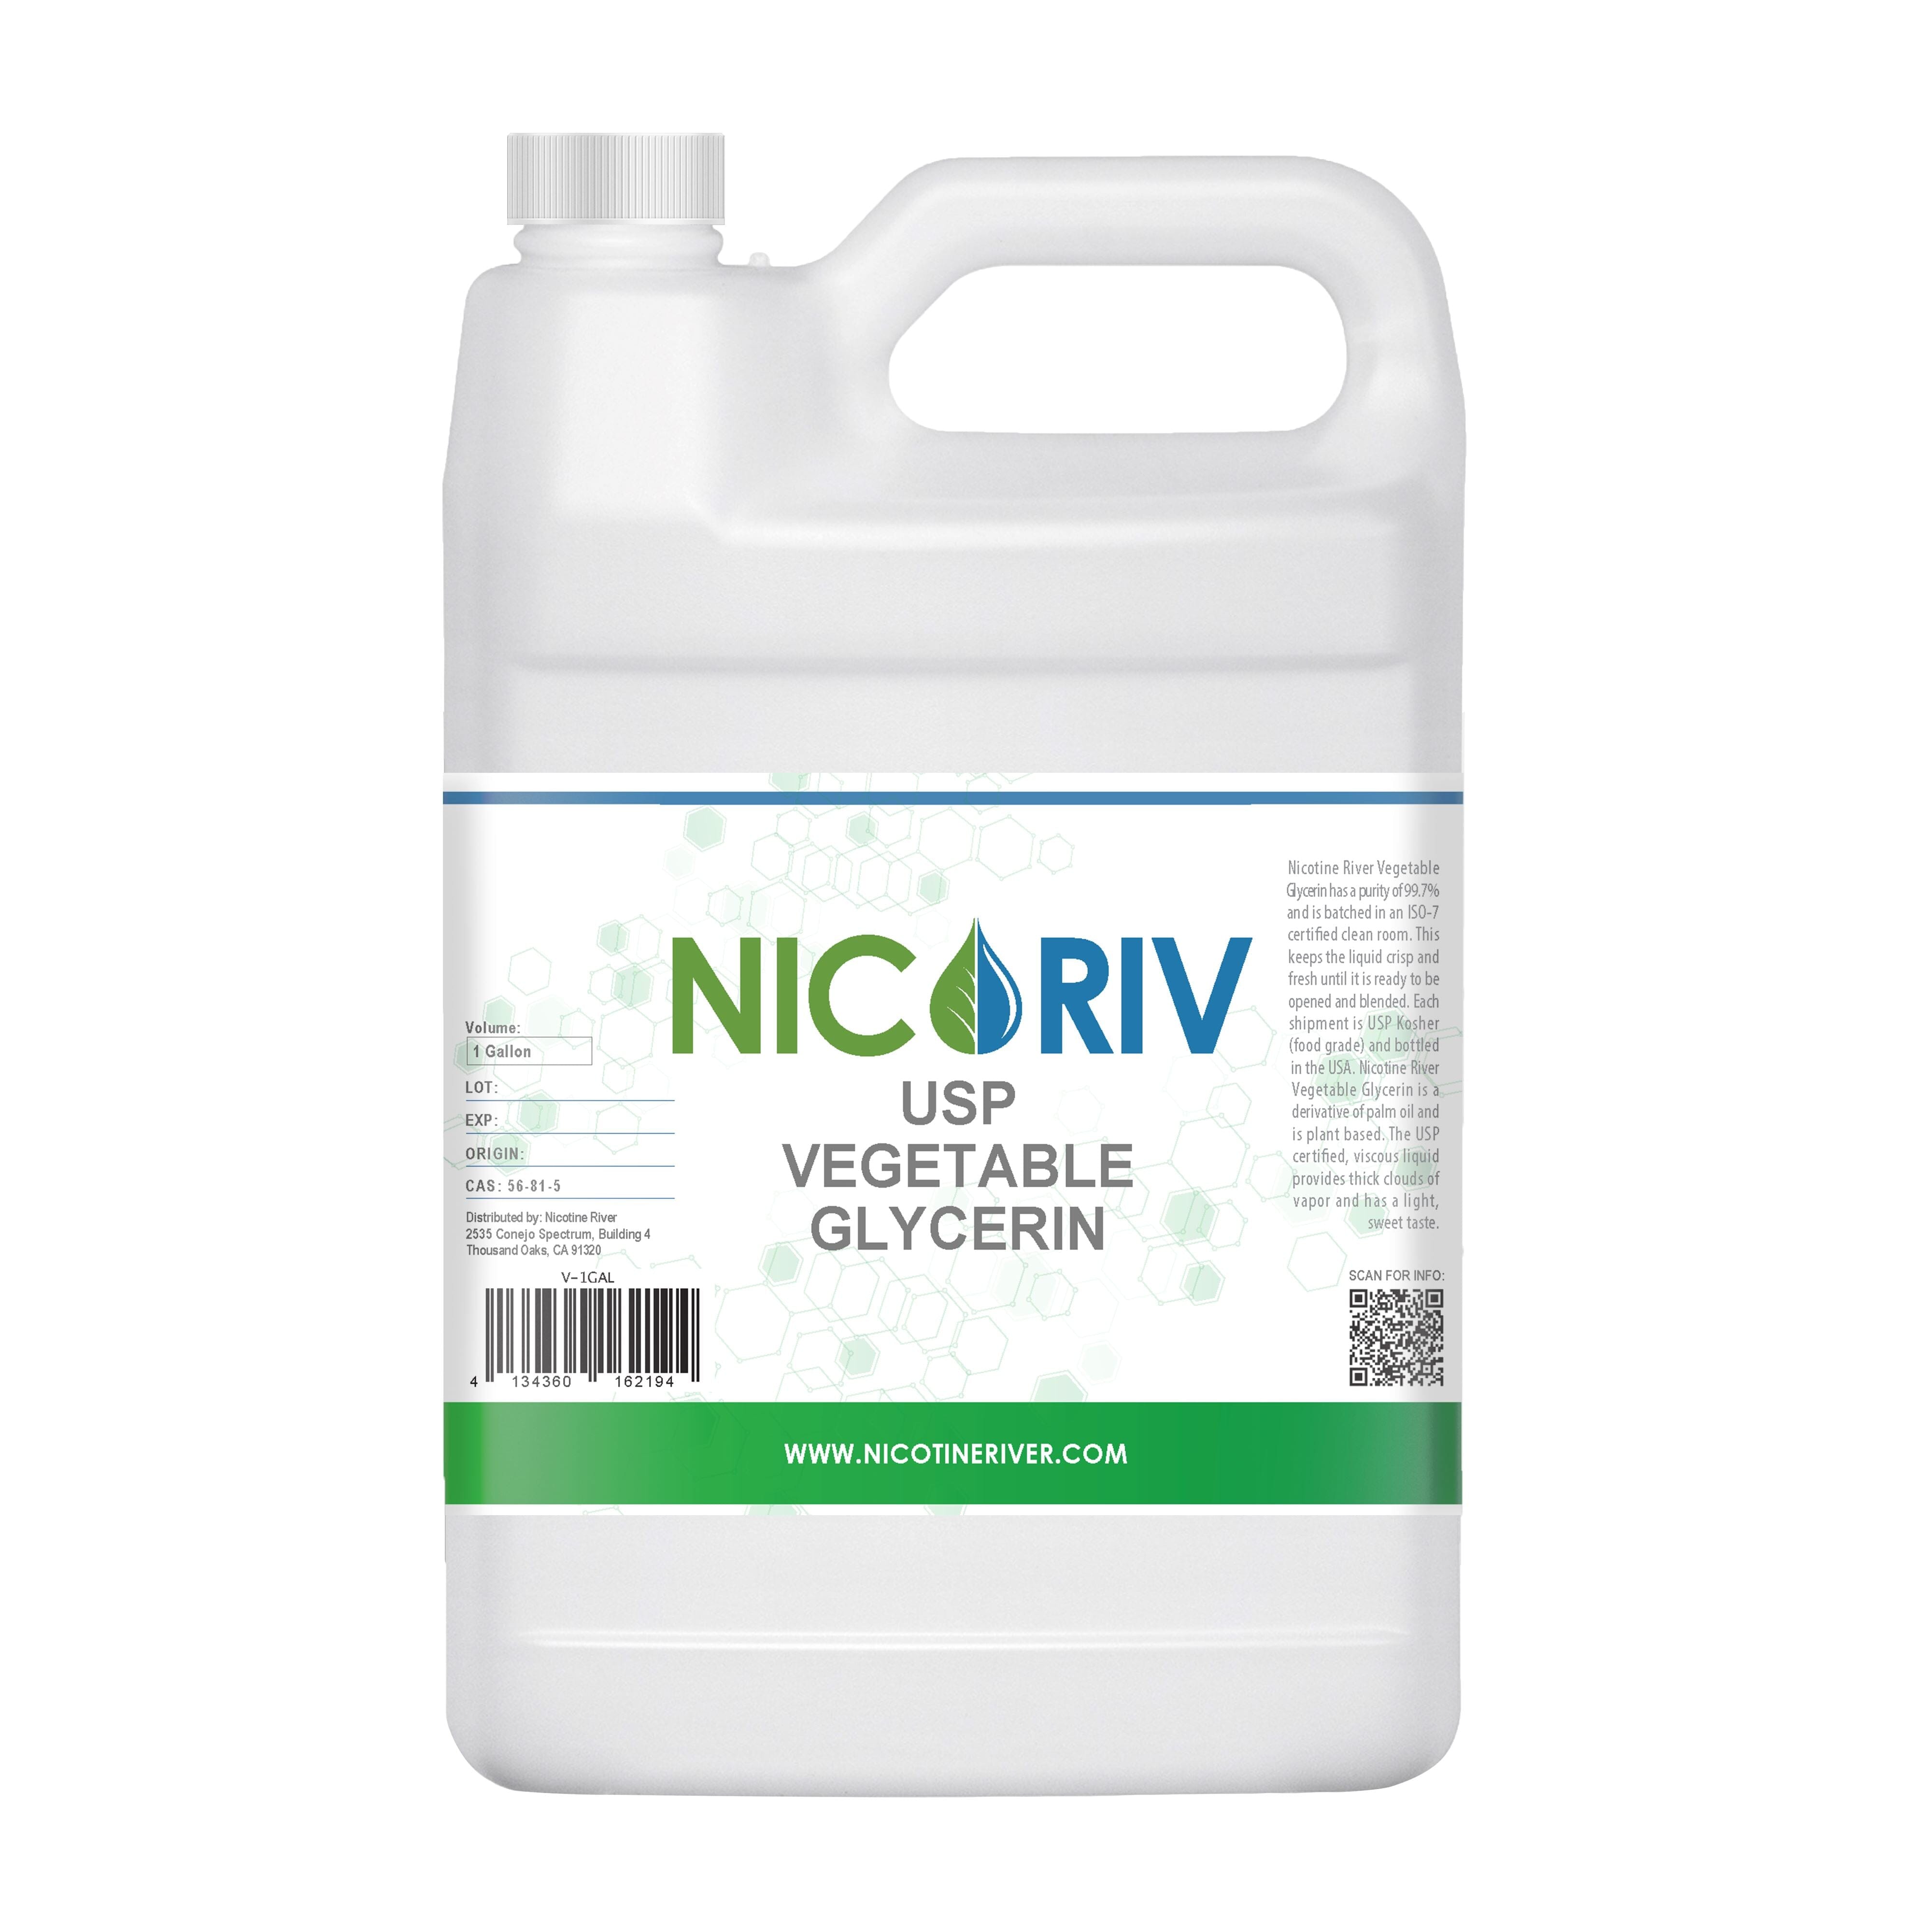 Seven Minerals Organic Vegetable Glycerin - Big 32 fl oz Bottle - No Palm Oil, Made with Organic Coconut Oil - Therapeutical Grade Glycerine Liquid